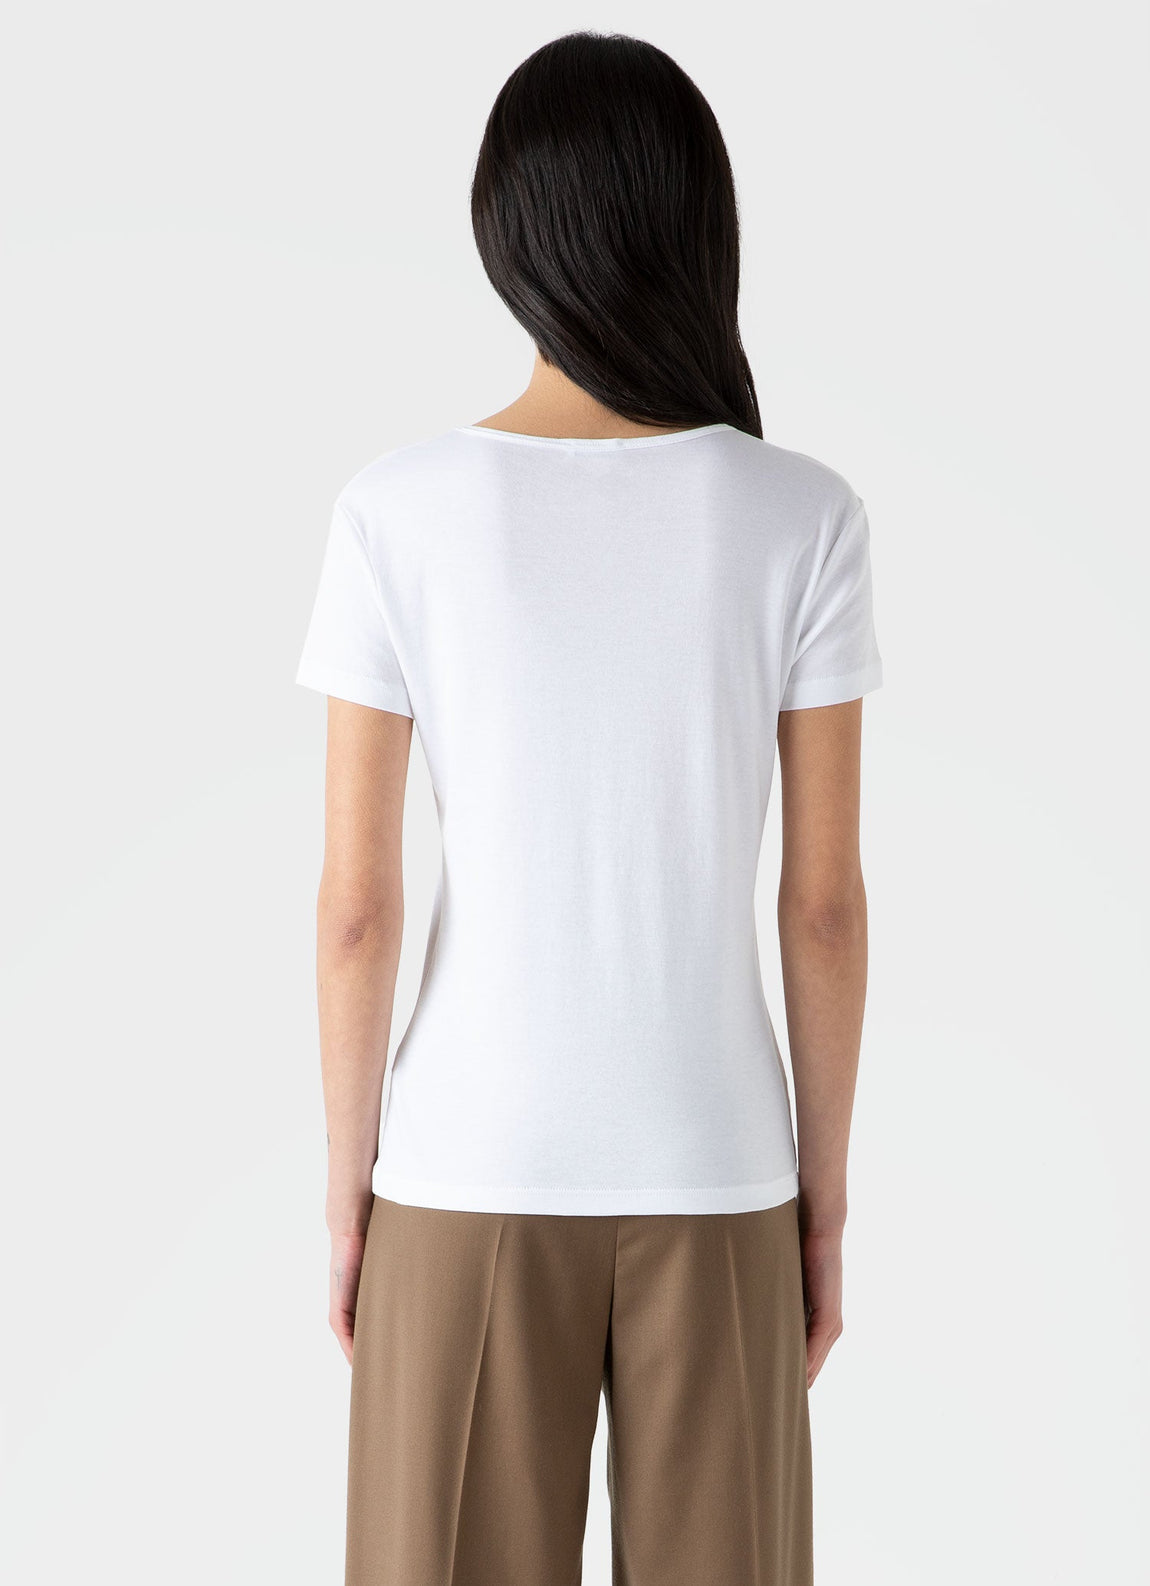 Women's Sea Island Cotton T-shirt in White